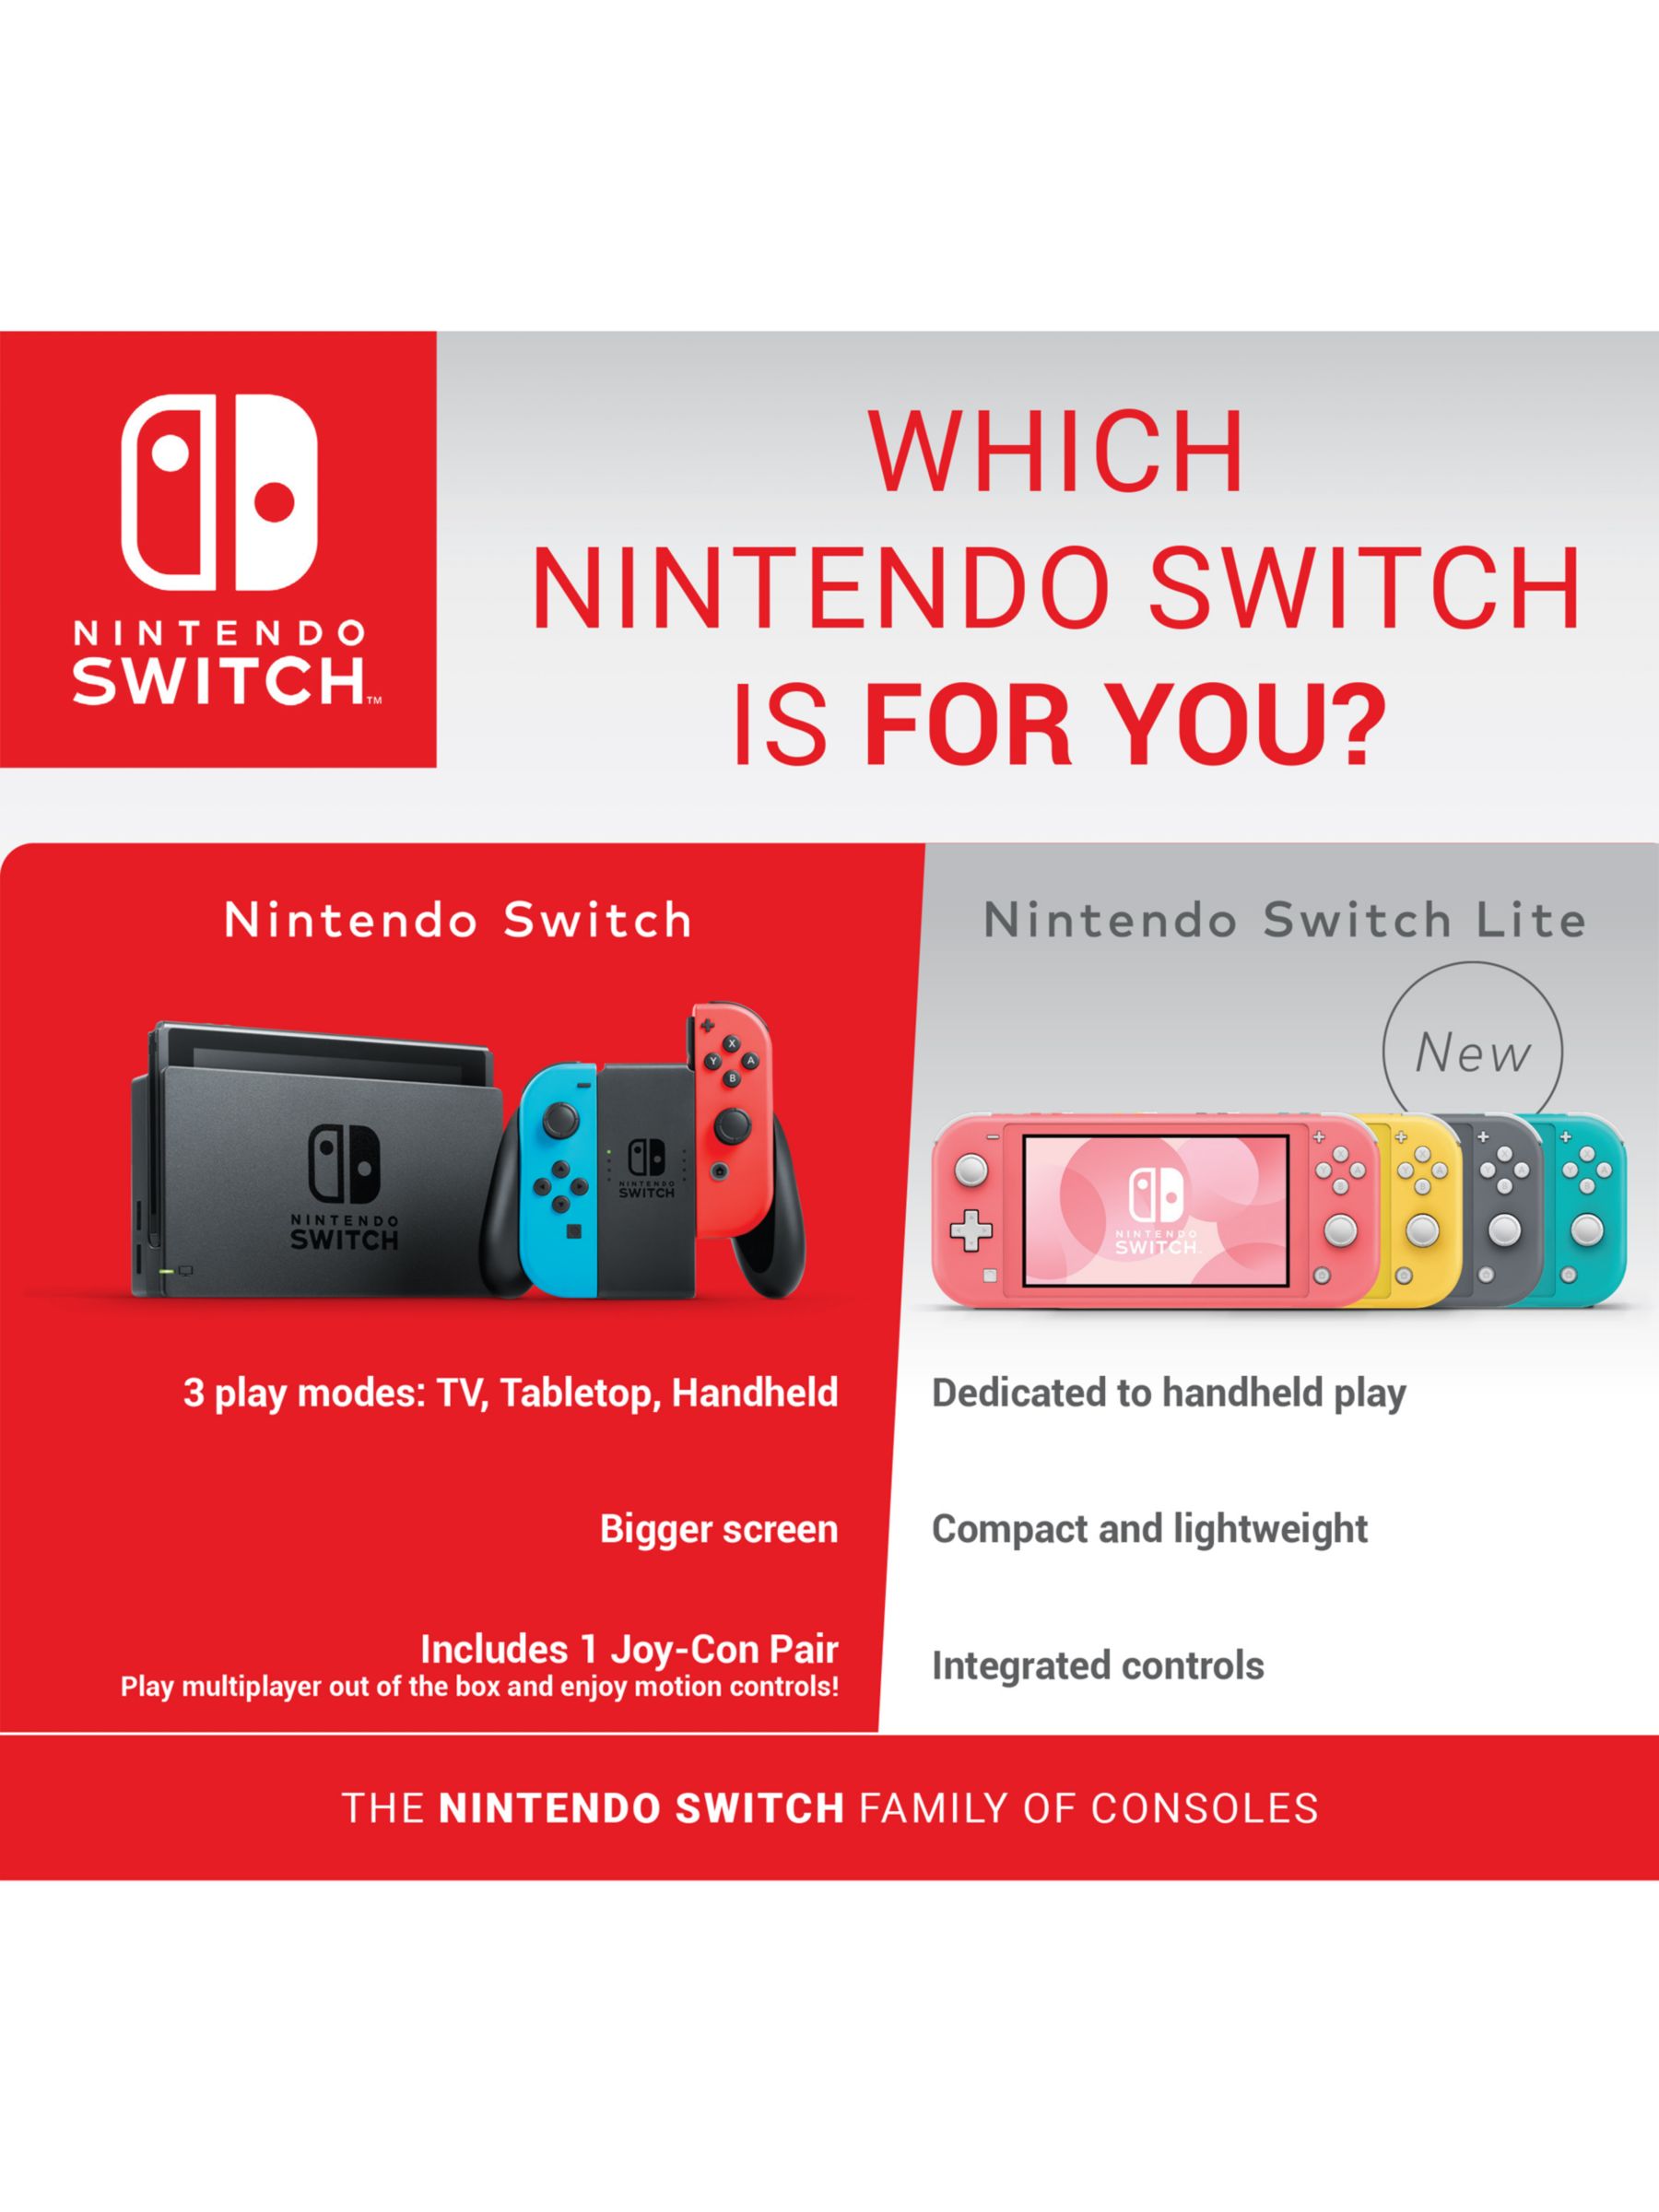 Nintendo Switch Lite, Handheld Console, Turquoise